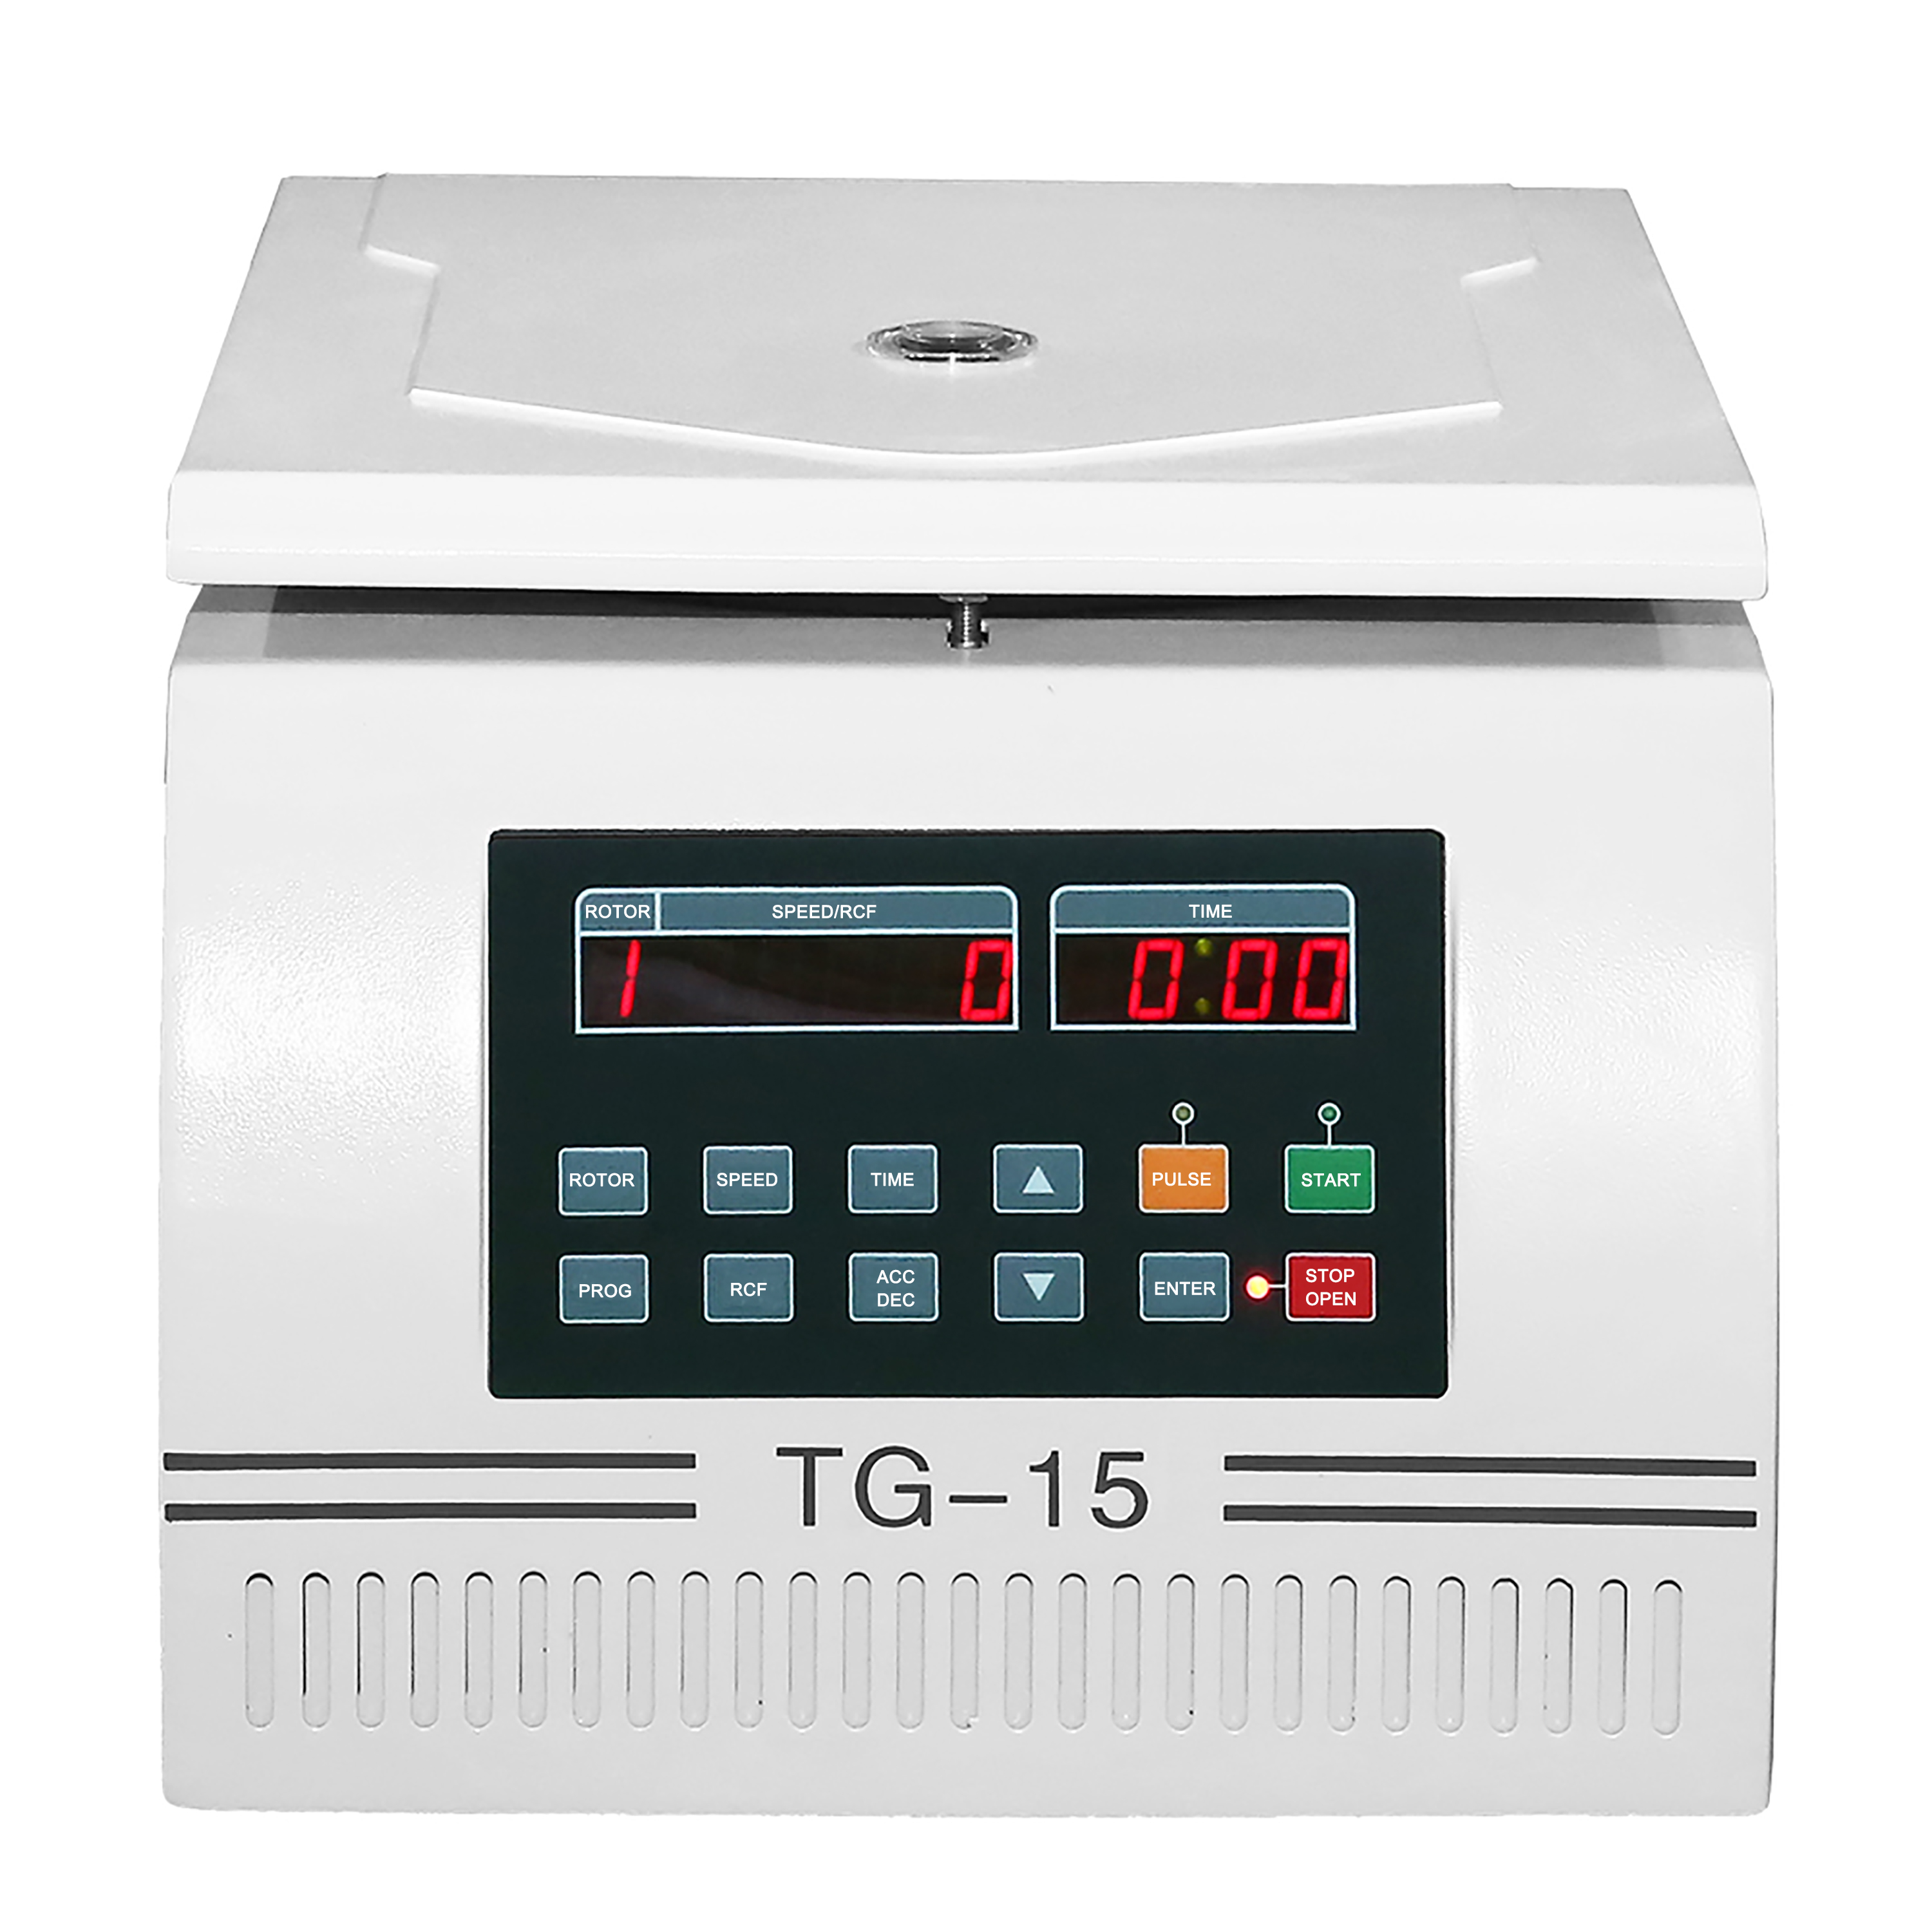 TG-15 high speed centrifuge